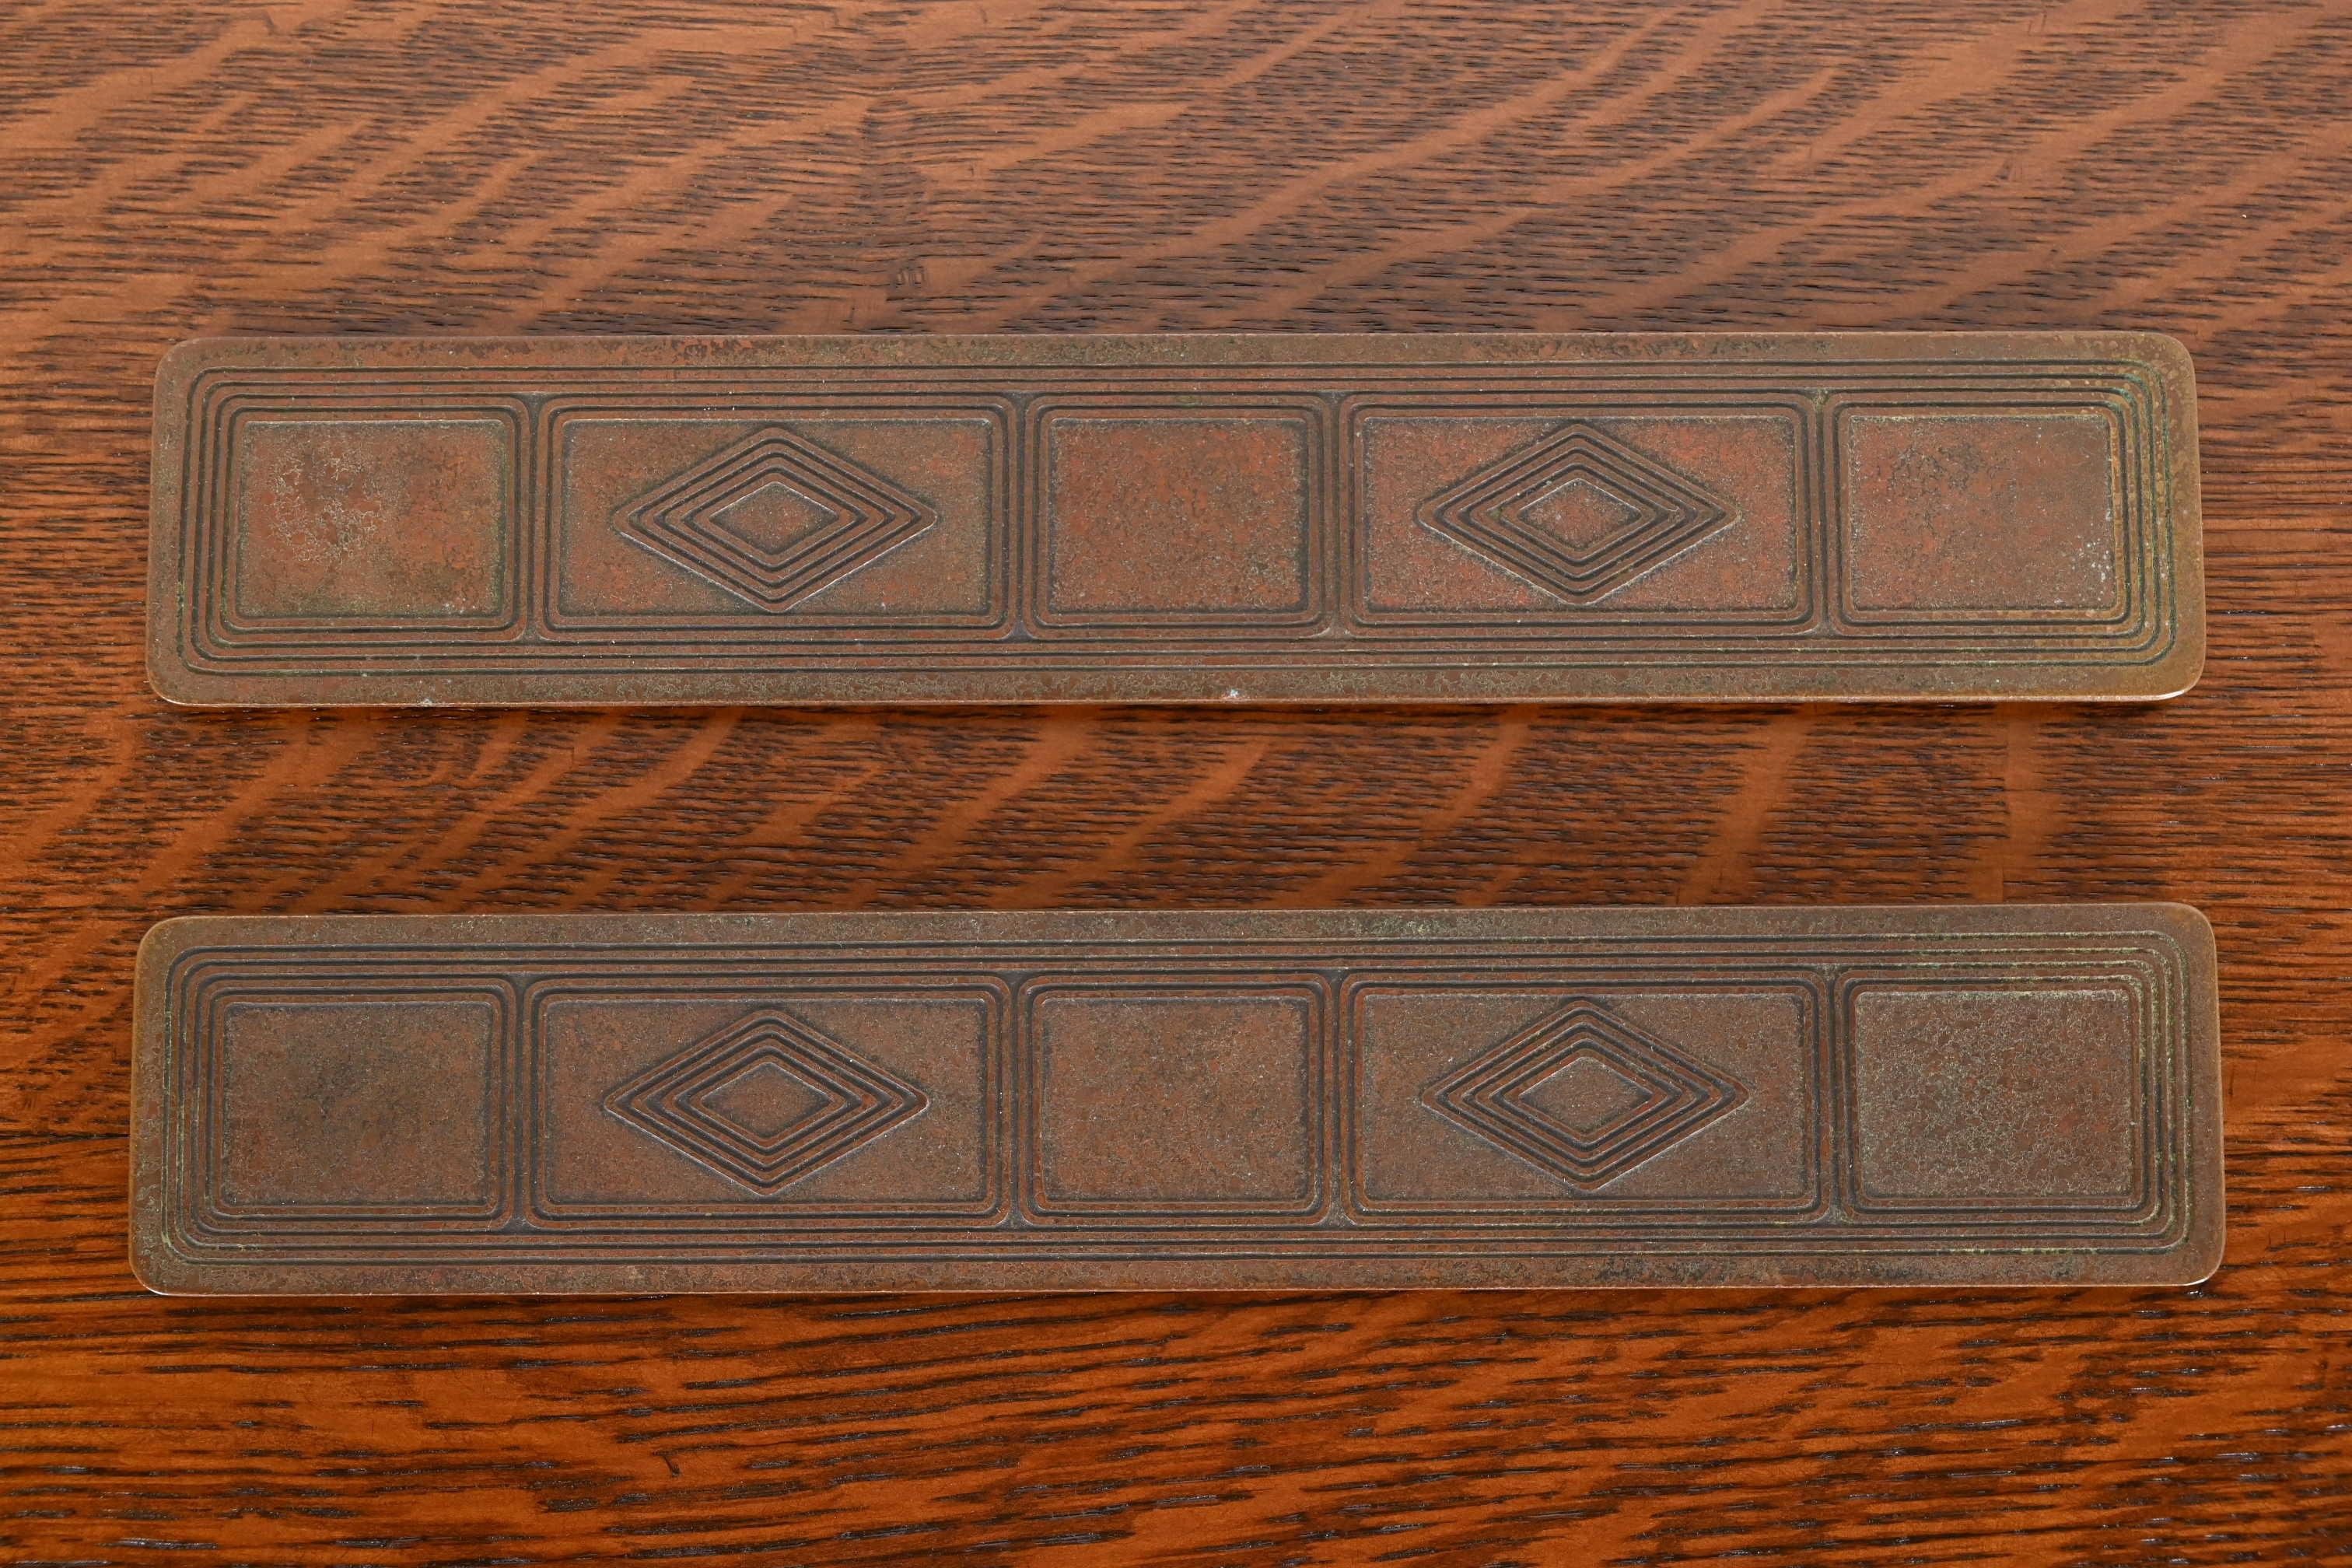 Tiffany Studios Graduate Pattern Bronze Blotter Ends With Leather Desk Blotter 1